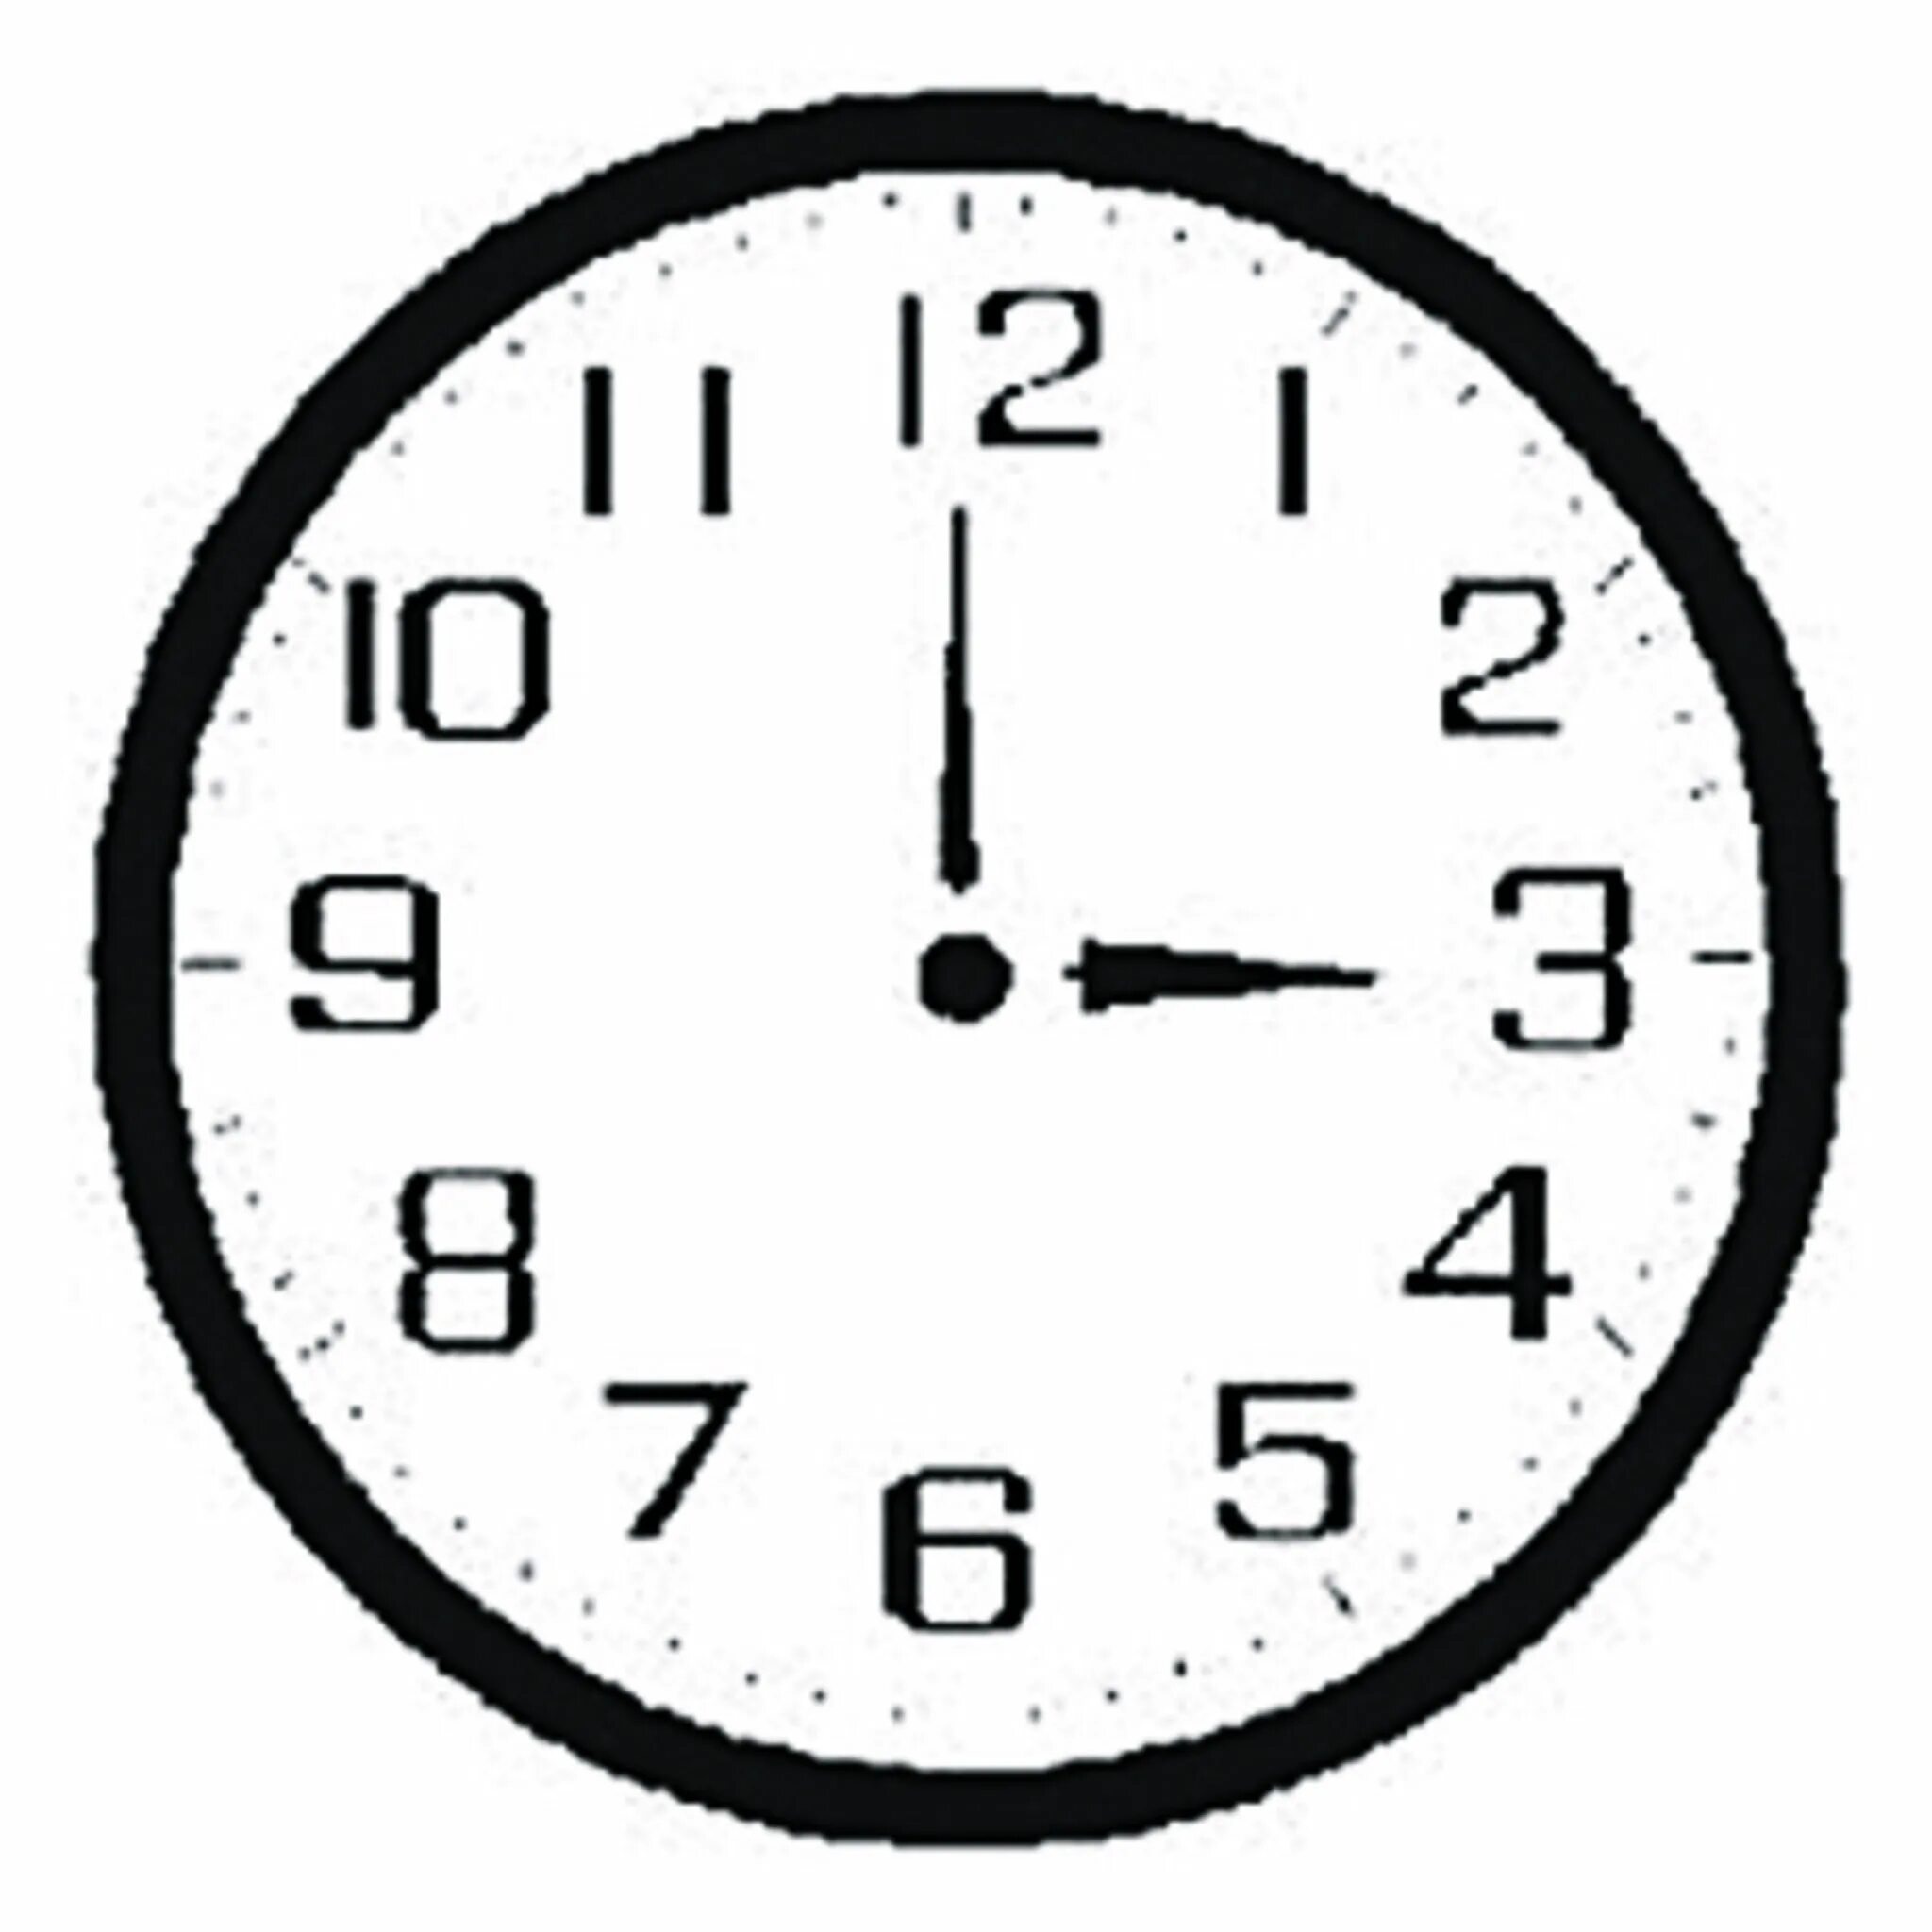 15 часов 39. Три часа на циферблате. Часы со стрелками. Изображение часов со стрелками. Часы три часа.